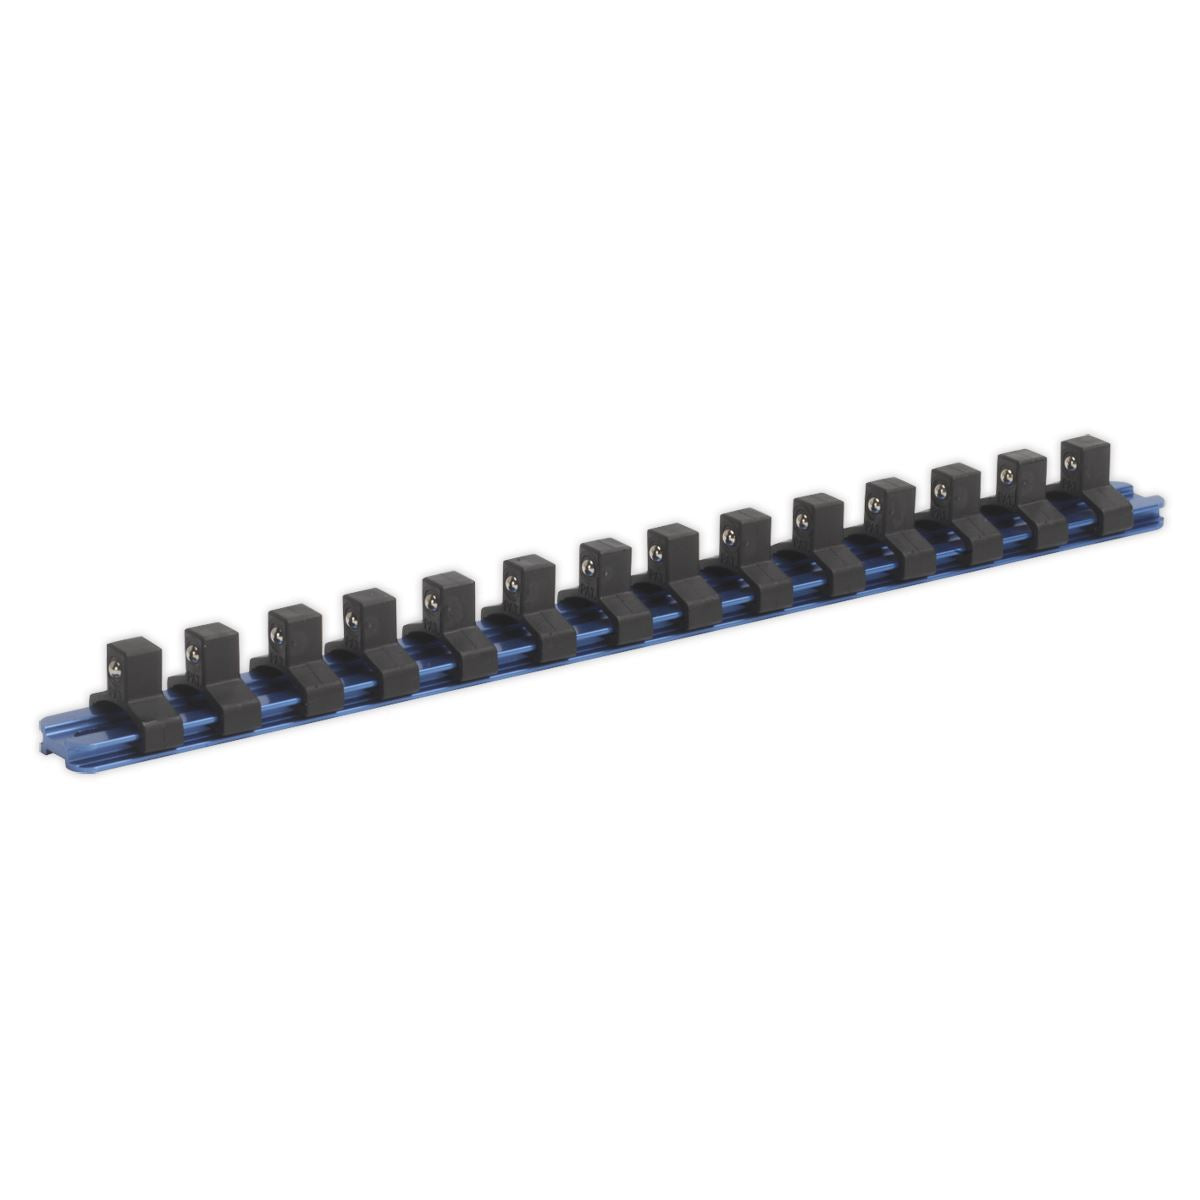 Sealey Premier Socket Retaining Rail with 14 Clips Aluminium 3/8"Sq Drive